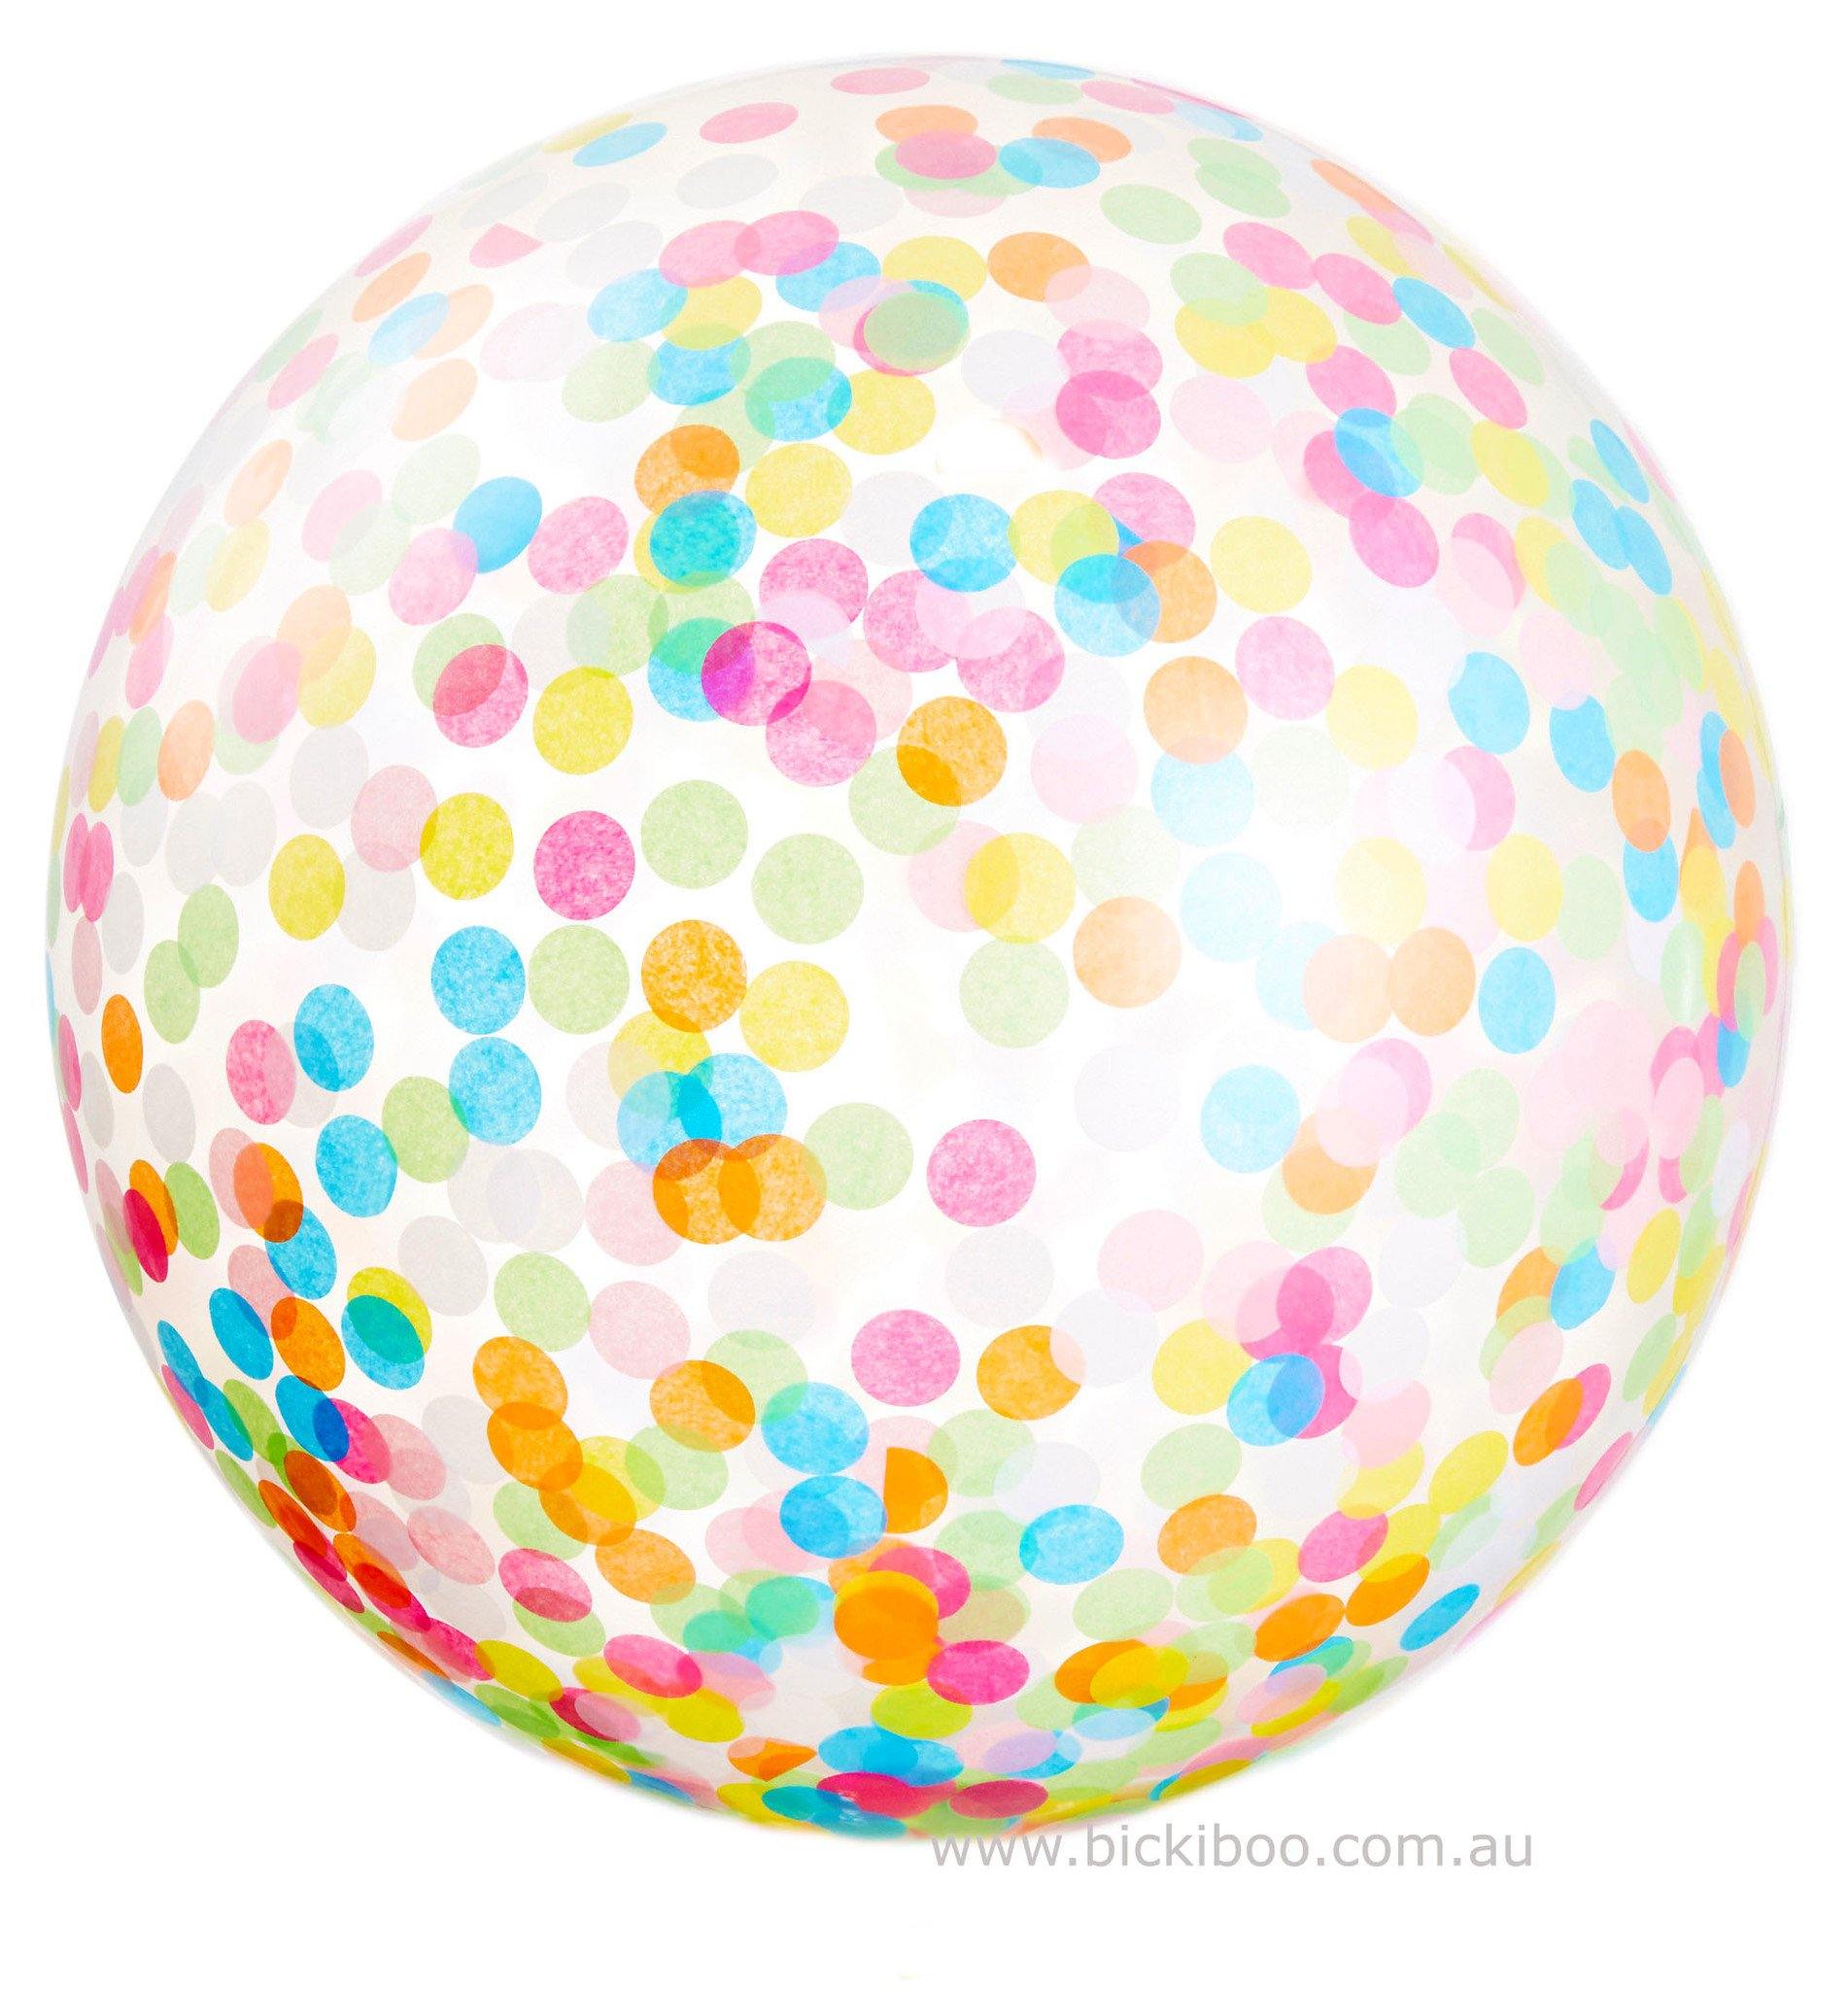 Custom Jumbo Confetti Balloon - 90cm - Bickiboo Designs